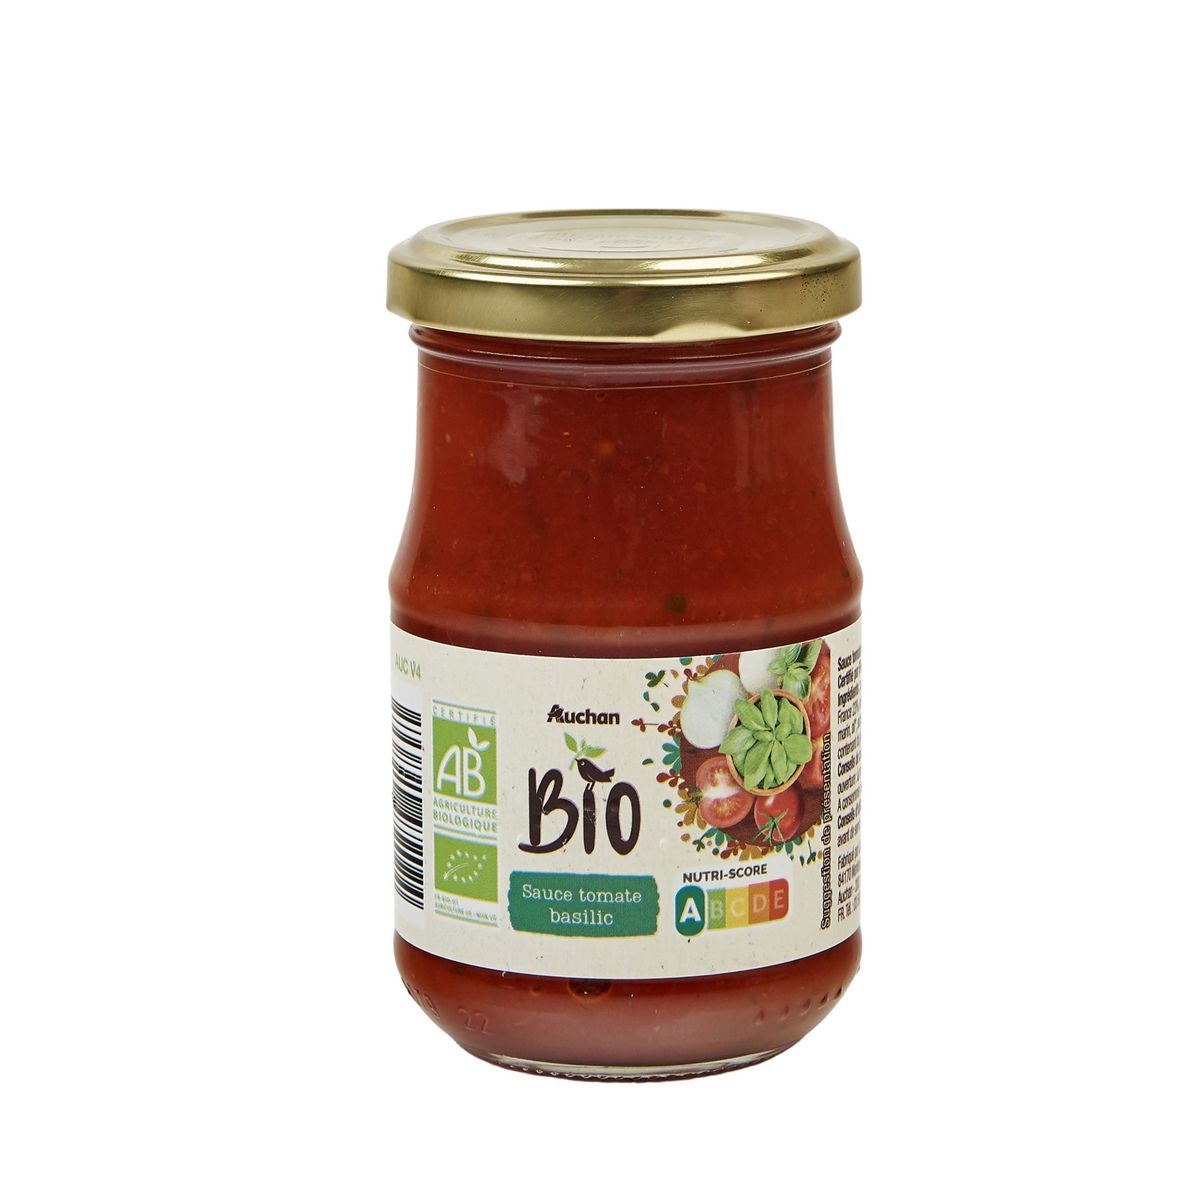 AUCHAN BIO Sauce tomate au basilic en bocal 200g